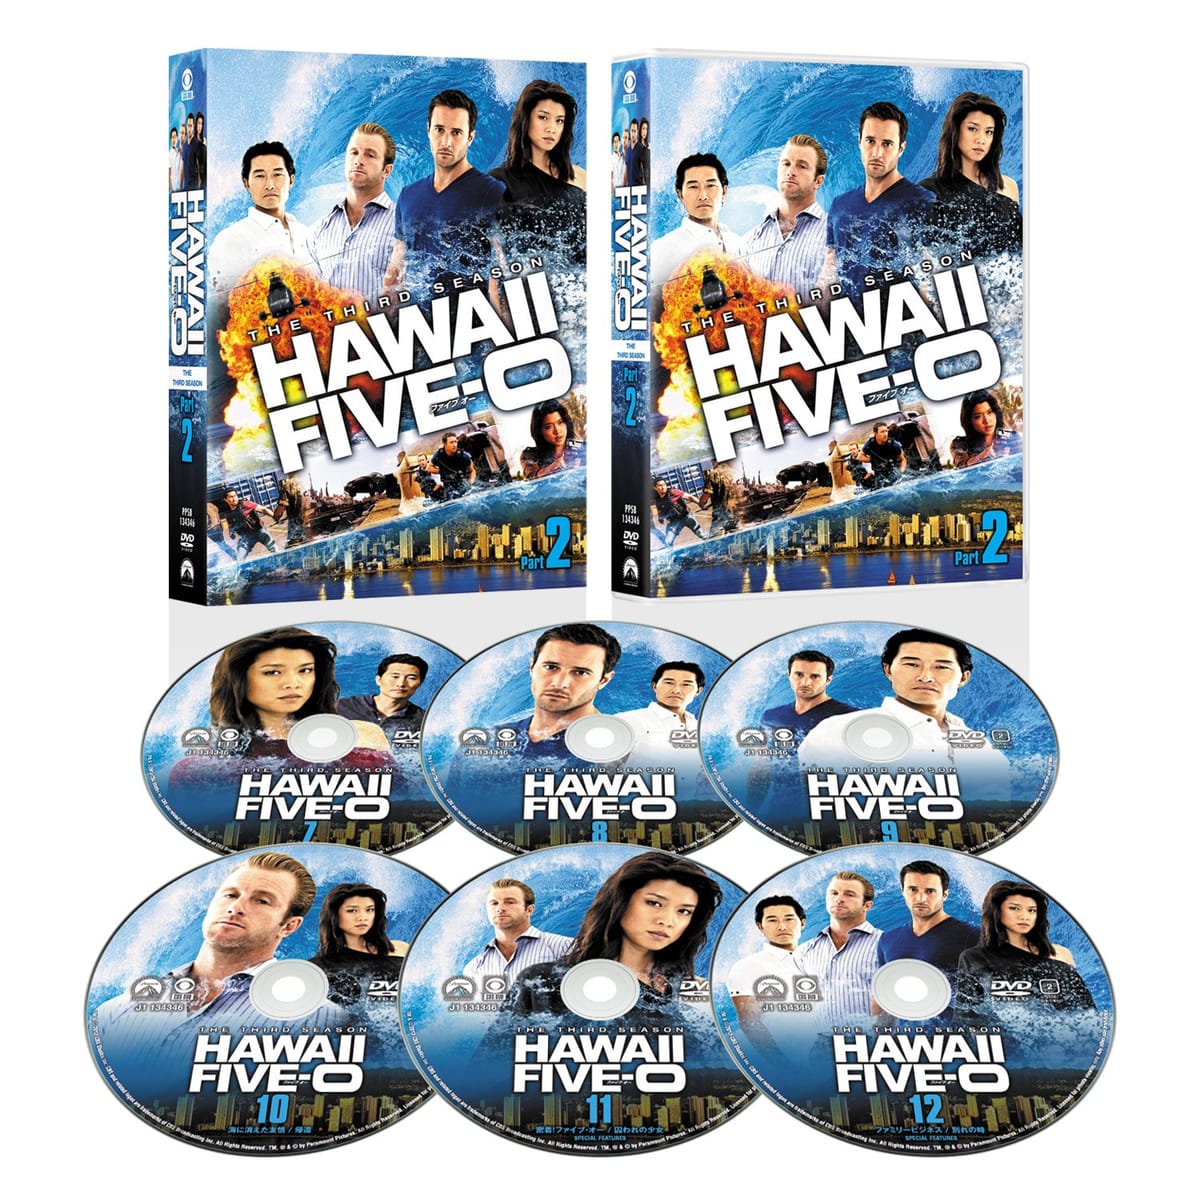 Hawaii Five-0 DVD-BOX シーズン3 Part2